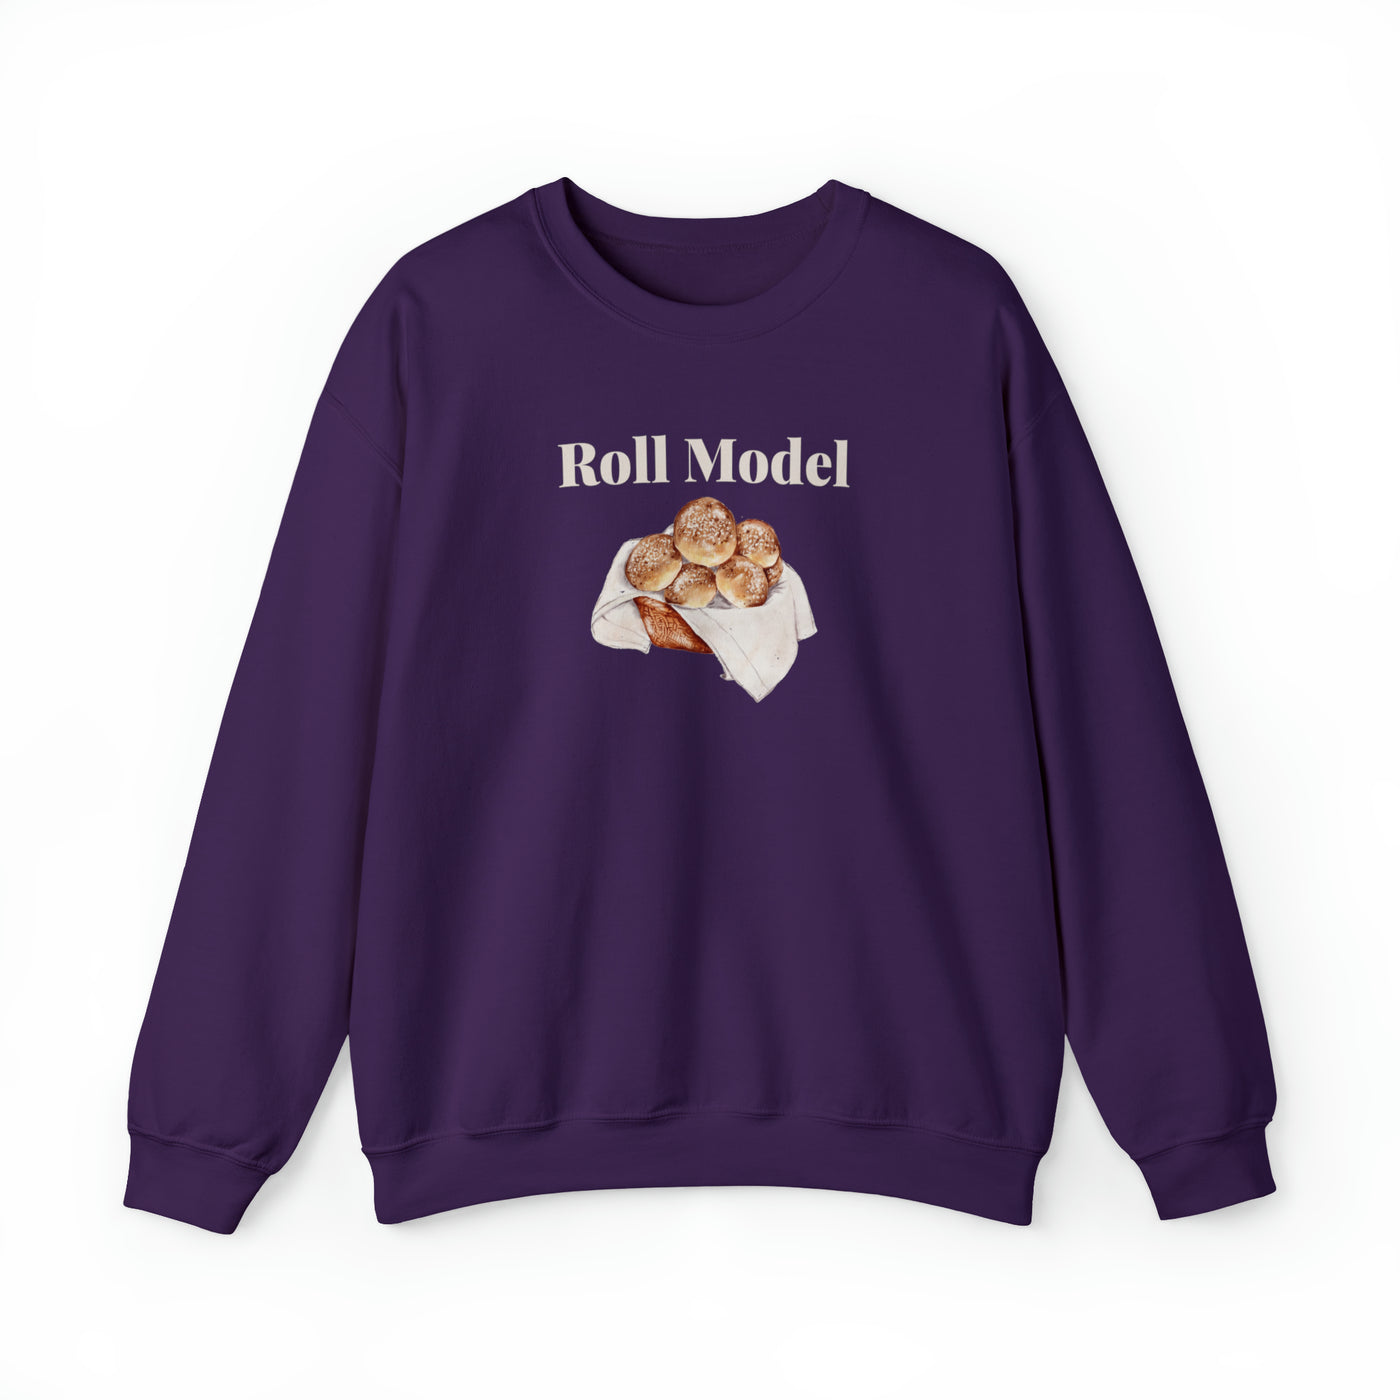 Roll Model Crewneck Sweatshirt